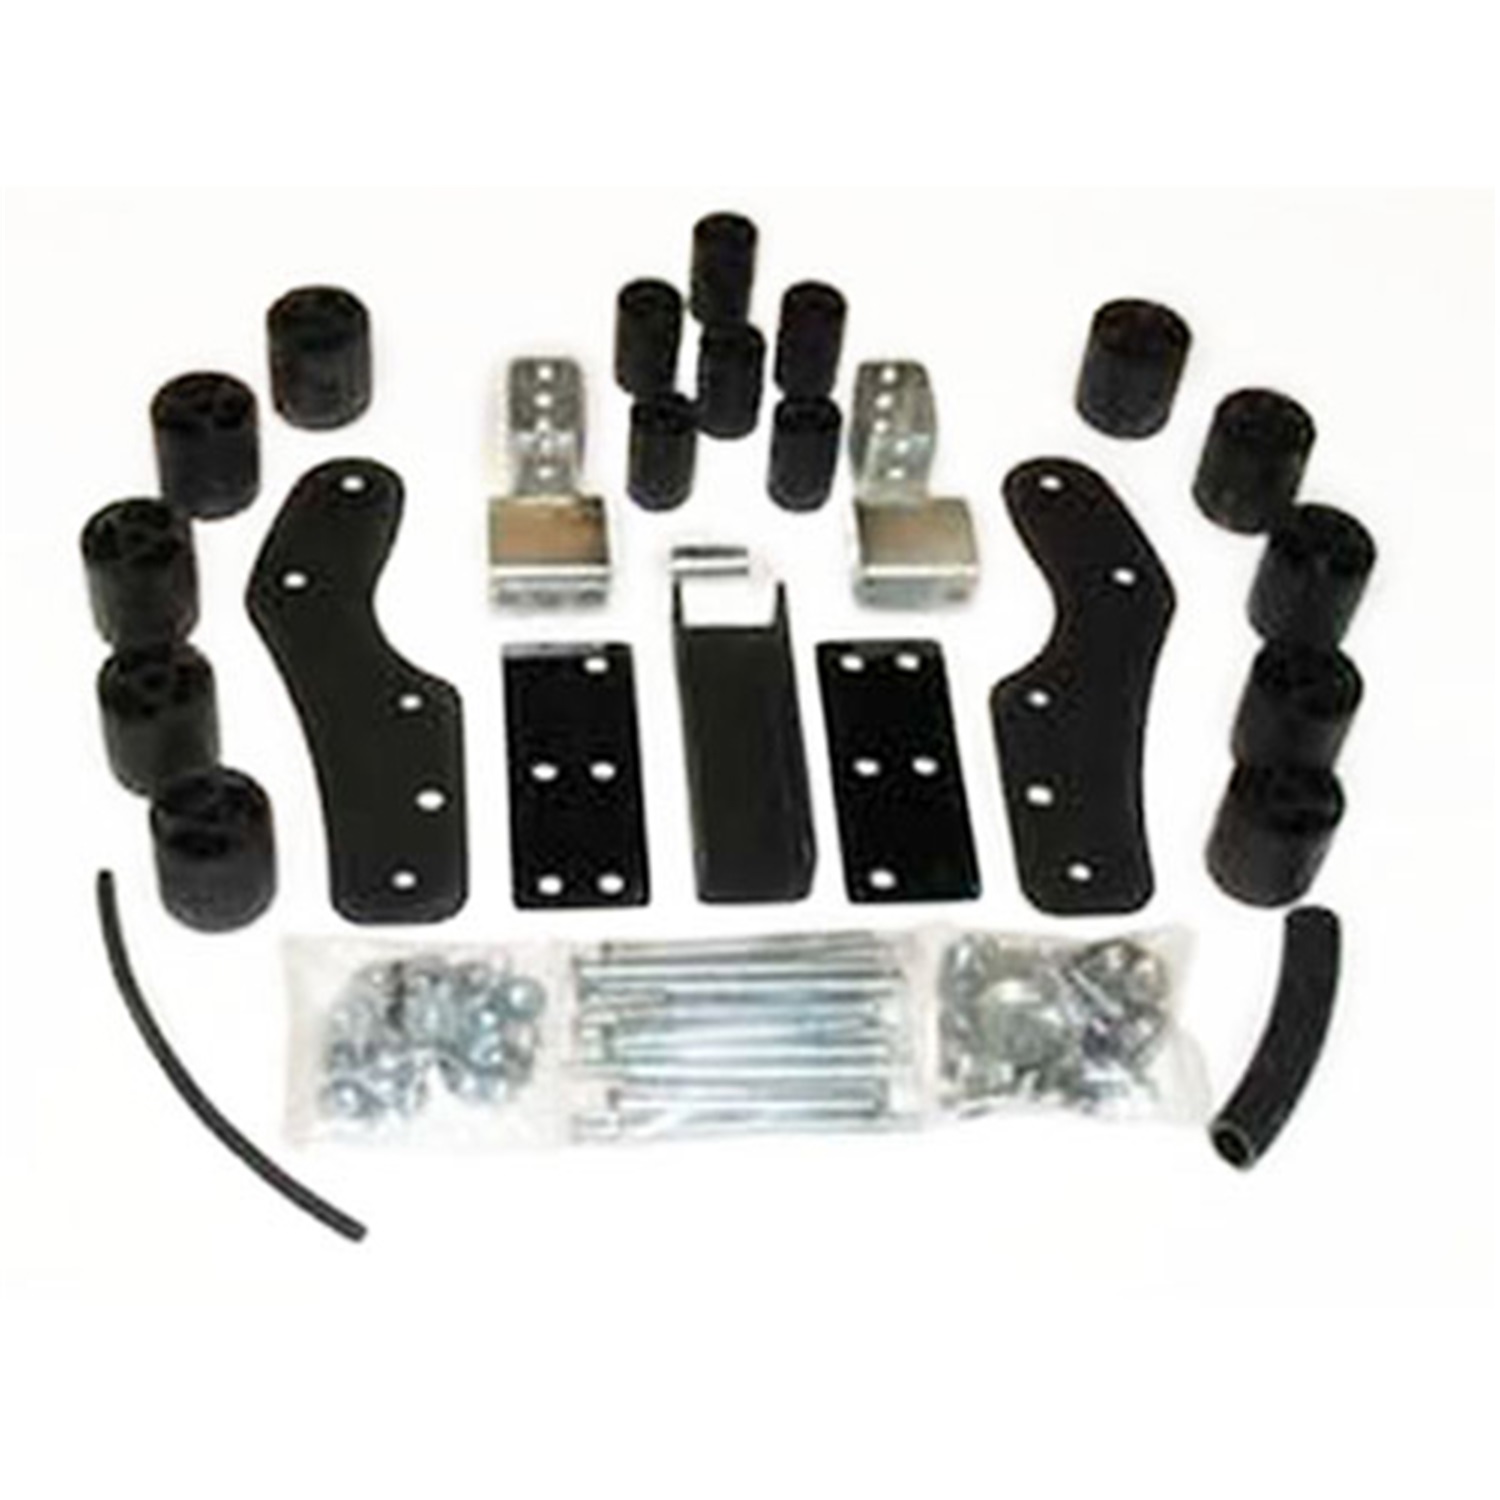 Performance Accessories Performance Accessories 5623 Body Lift Kit Fits 06 Tundra